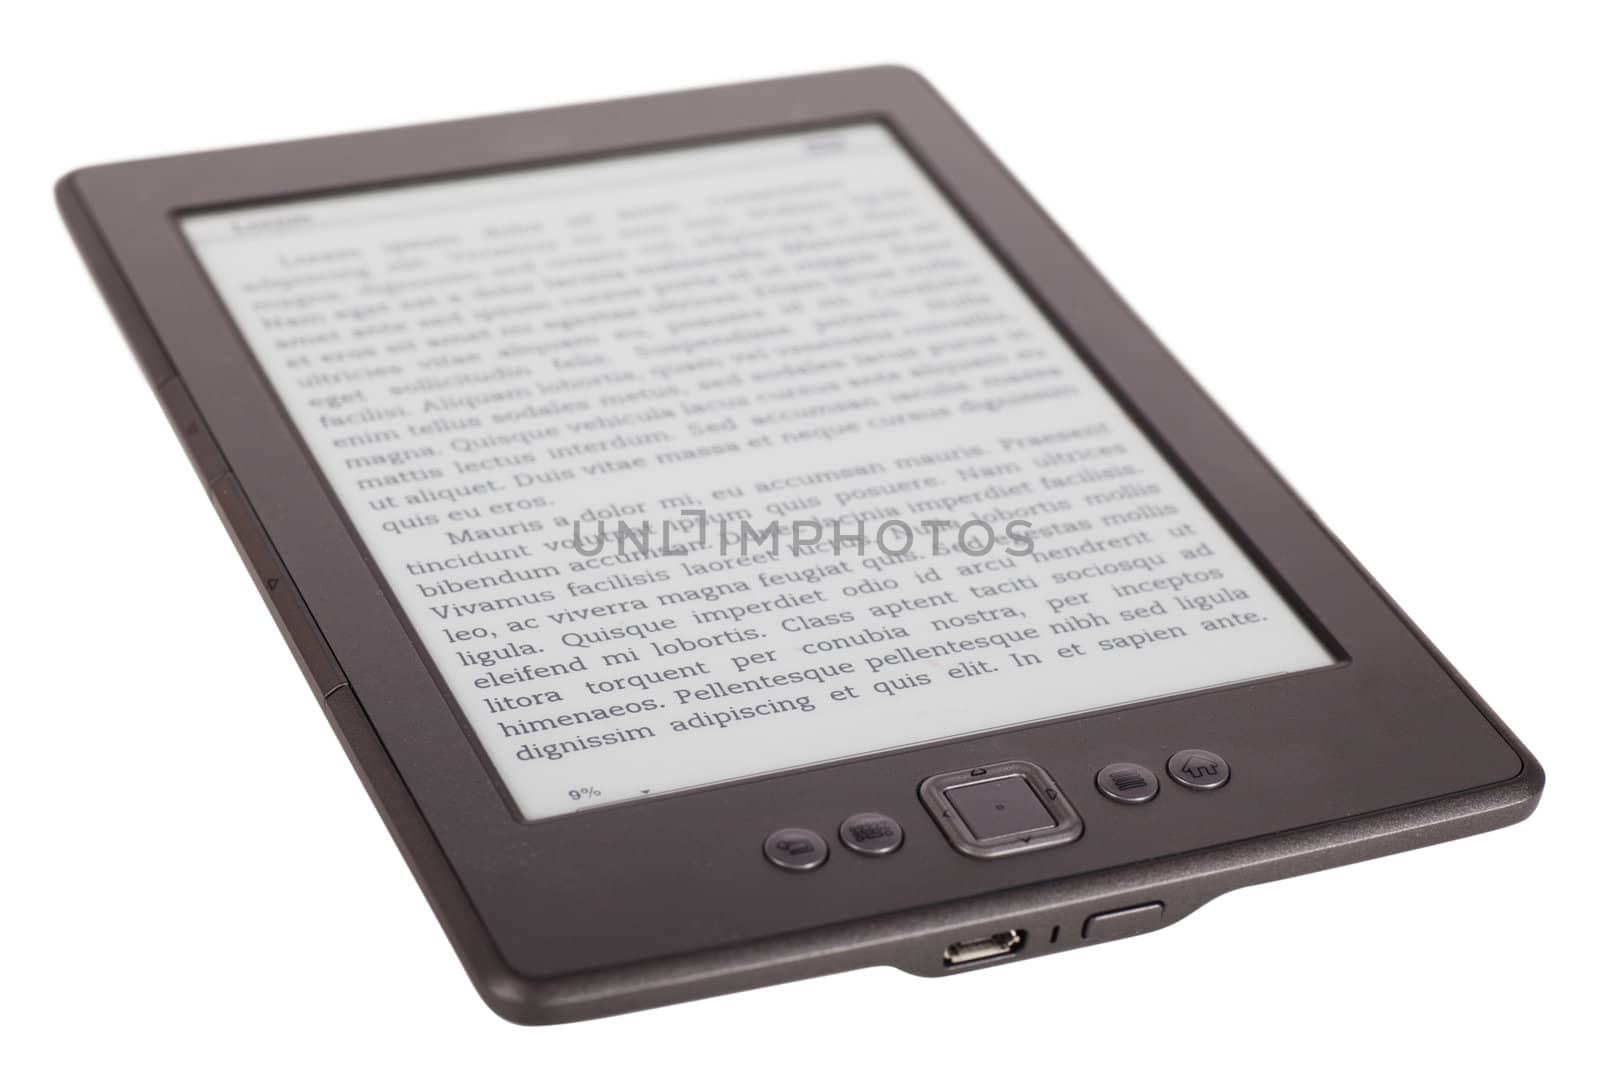 E-reader by AGorohov